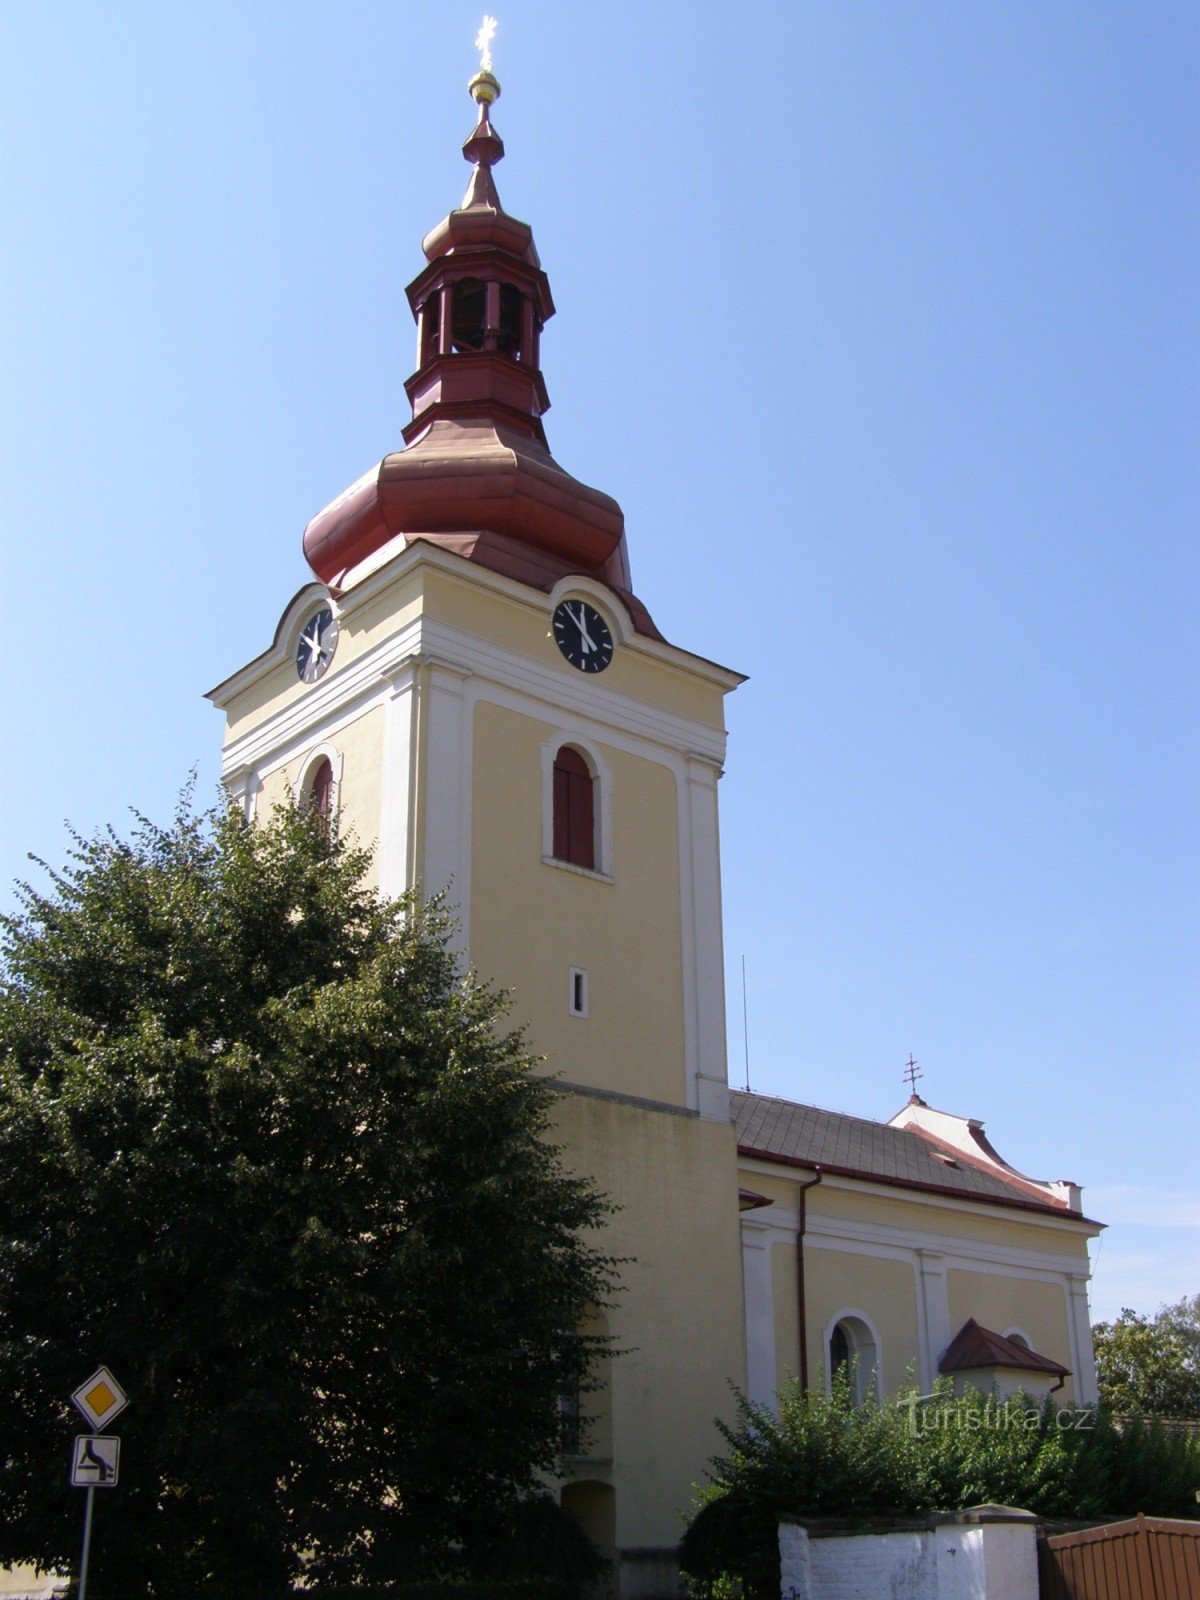 Milovice - chiesa